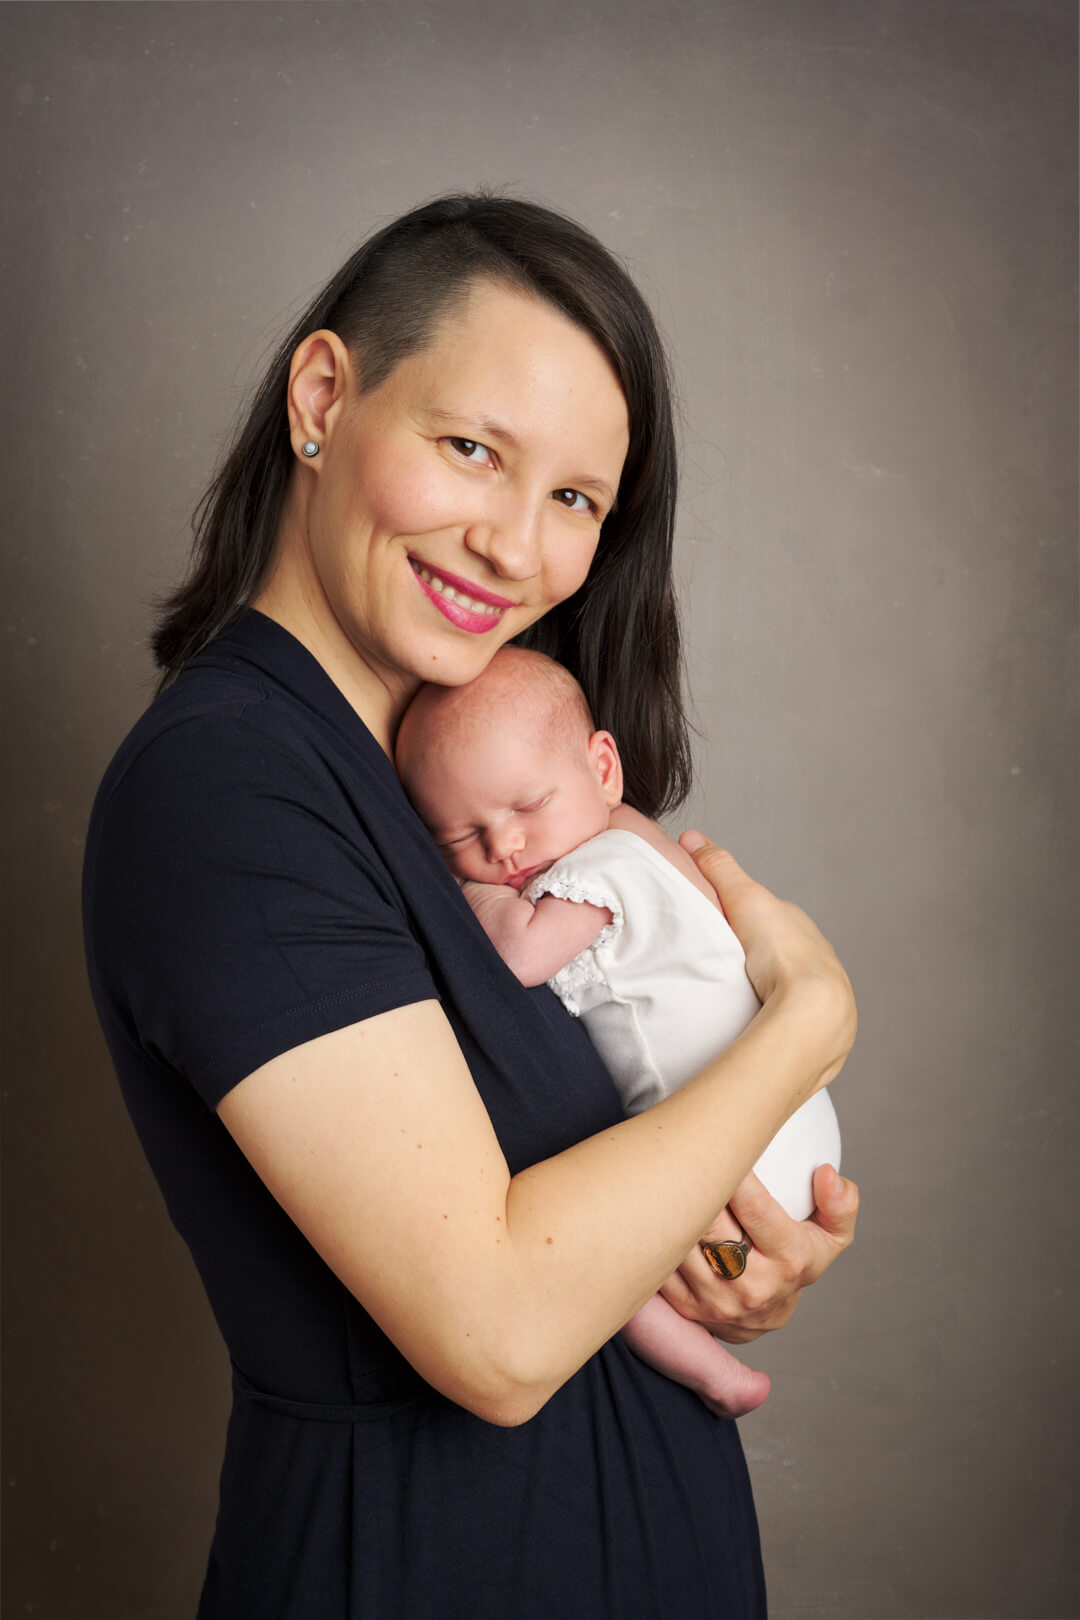 Neugeborenenfotos Babyfotos Neugeborenenfotografie Newborn Shooting Babyfotografie Ingolstadt Mandy Limbach Fotografie